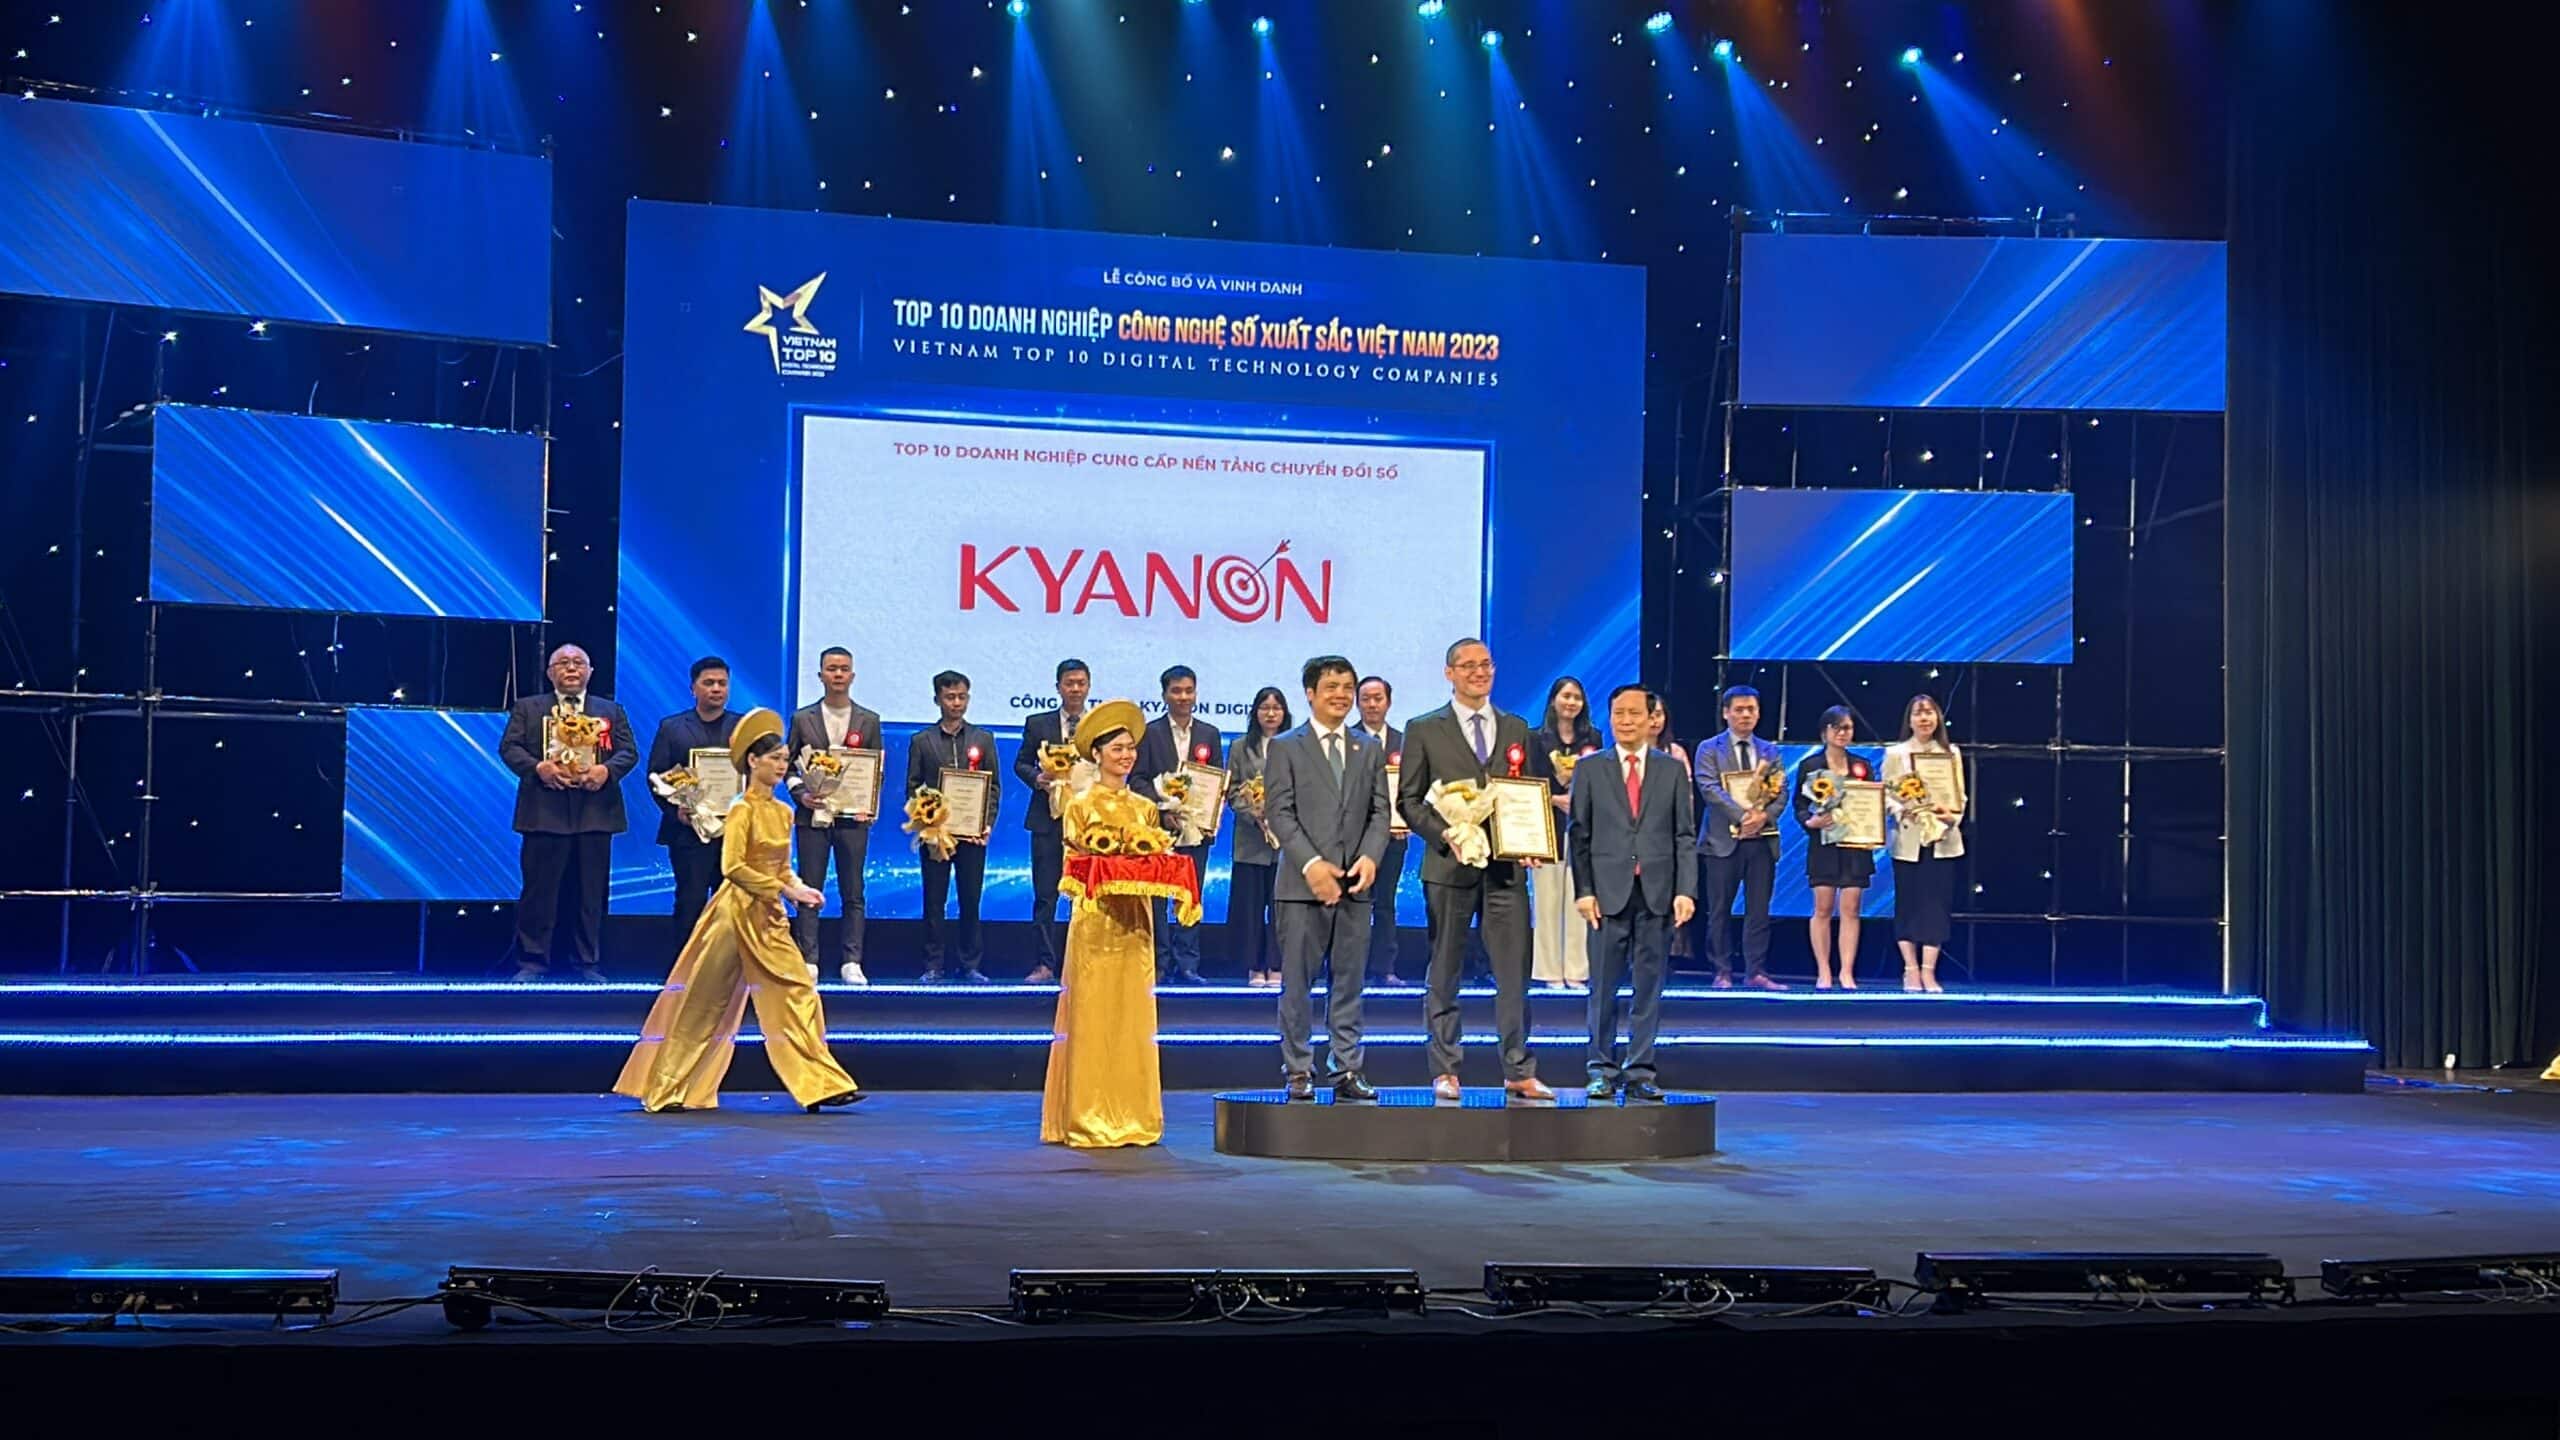 Kyanon Digital won the top 10 digital technology companies vietnam 2023